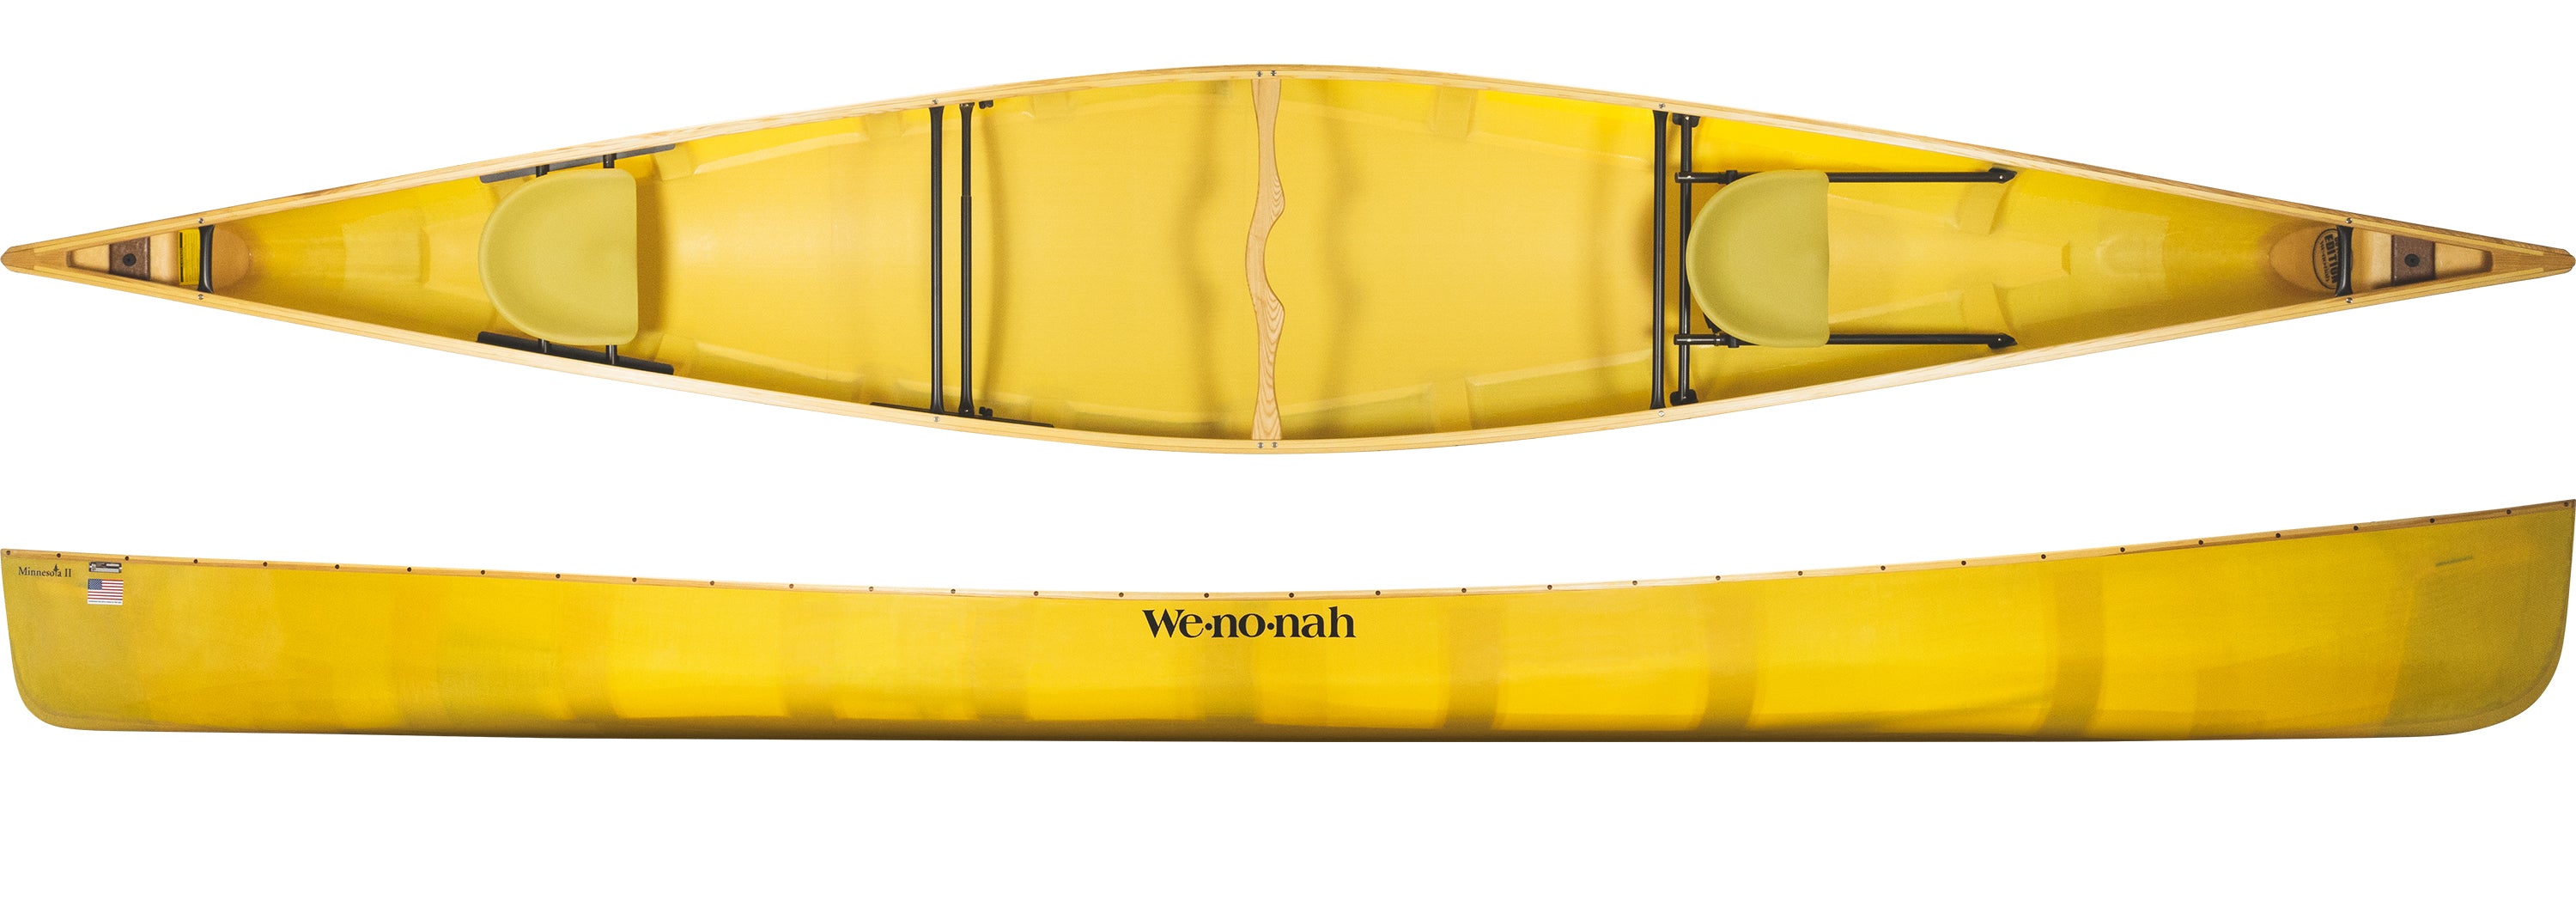 Wenonah MINNESOTA II – Offshore Marine